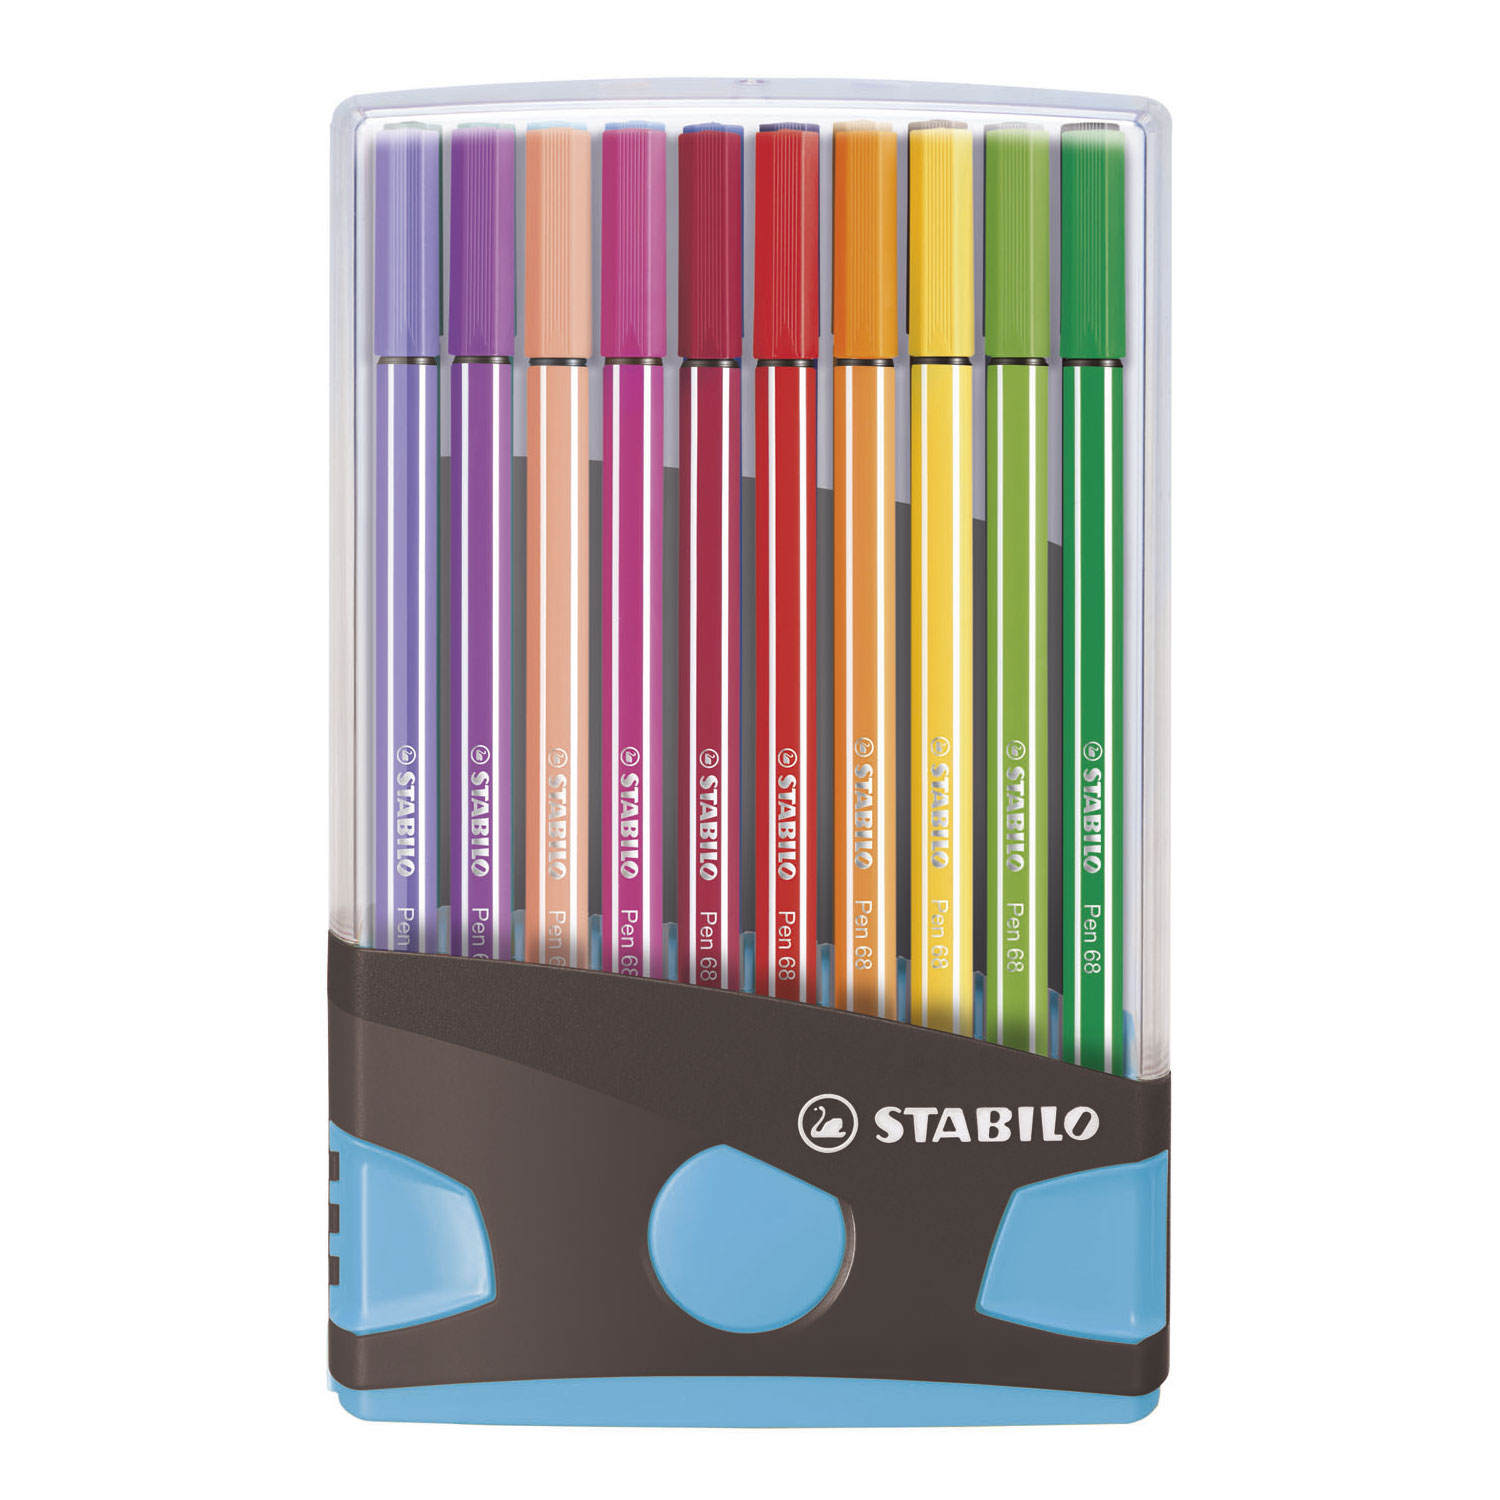 STABILO Pen 68 Colorparade Antraciet/Lichtblauw, 20st.